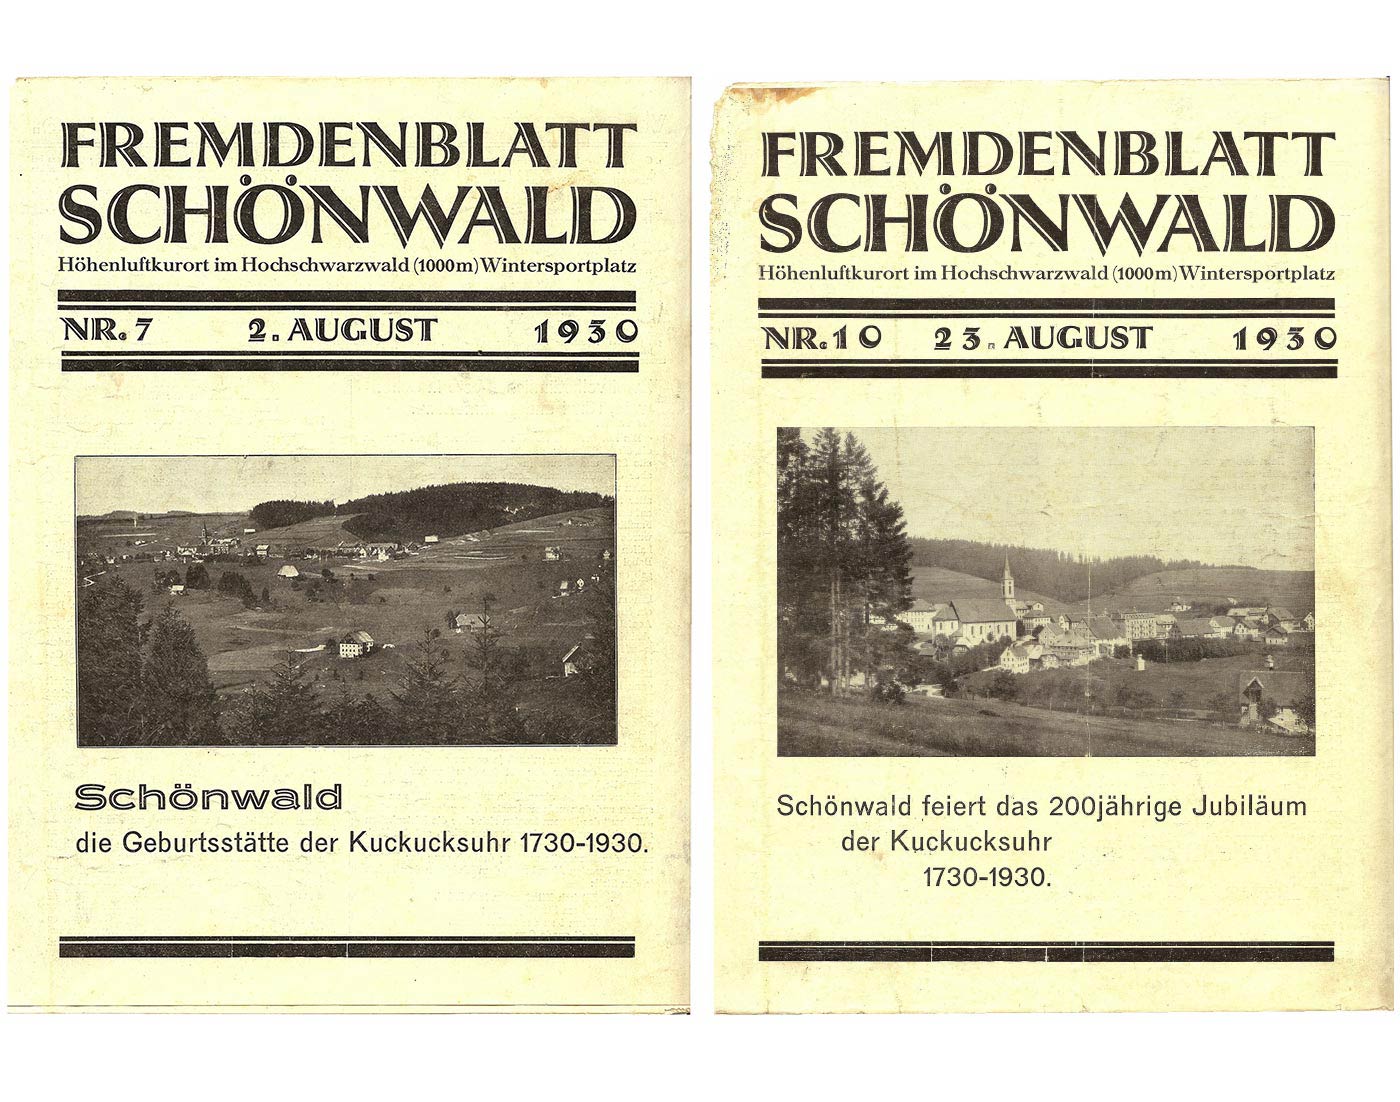 Fremdenblatt Schönwald